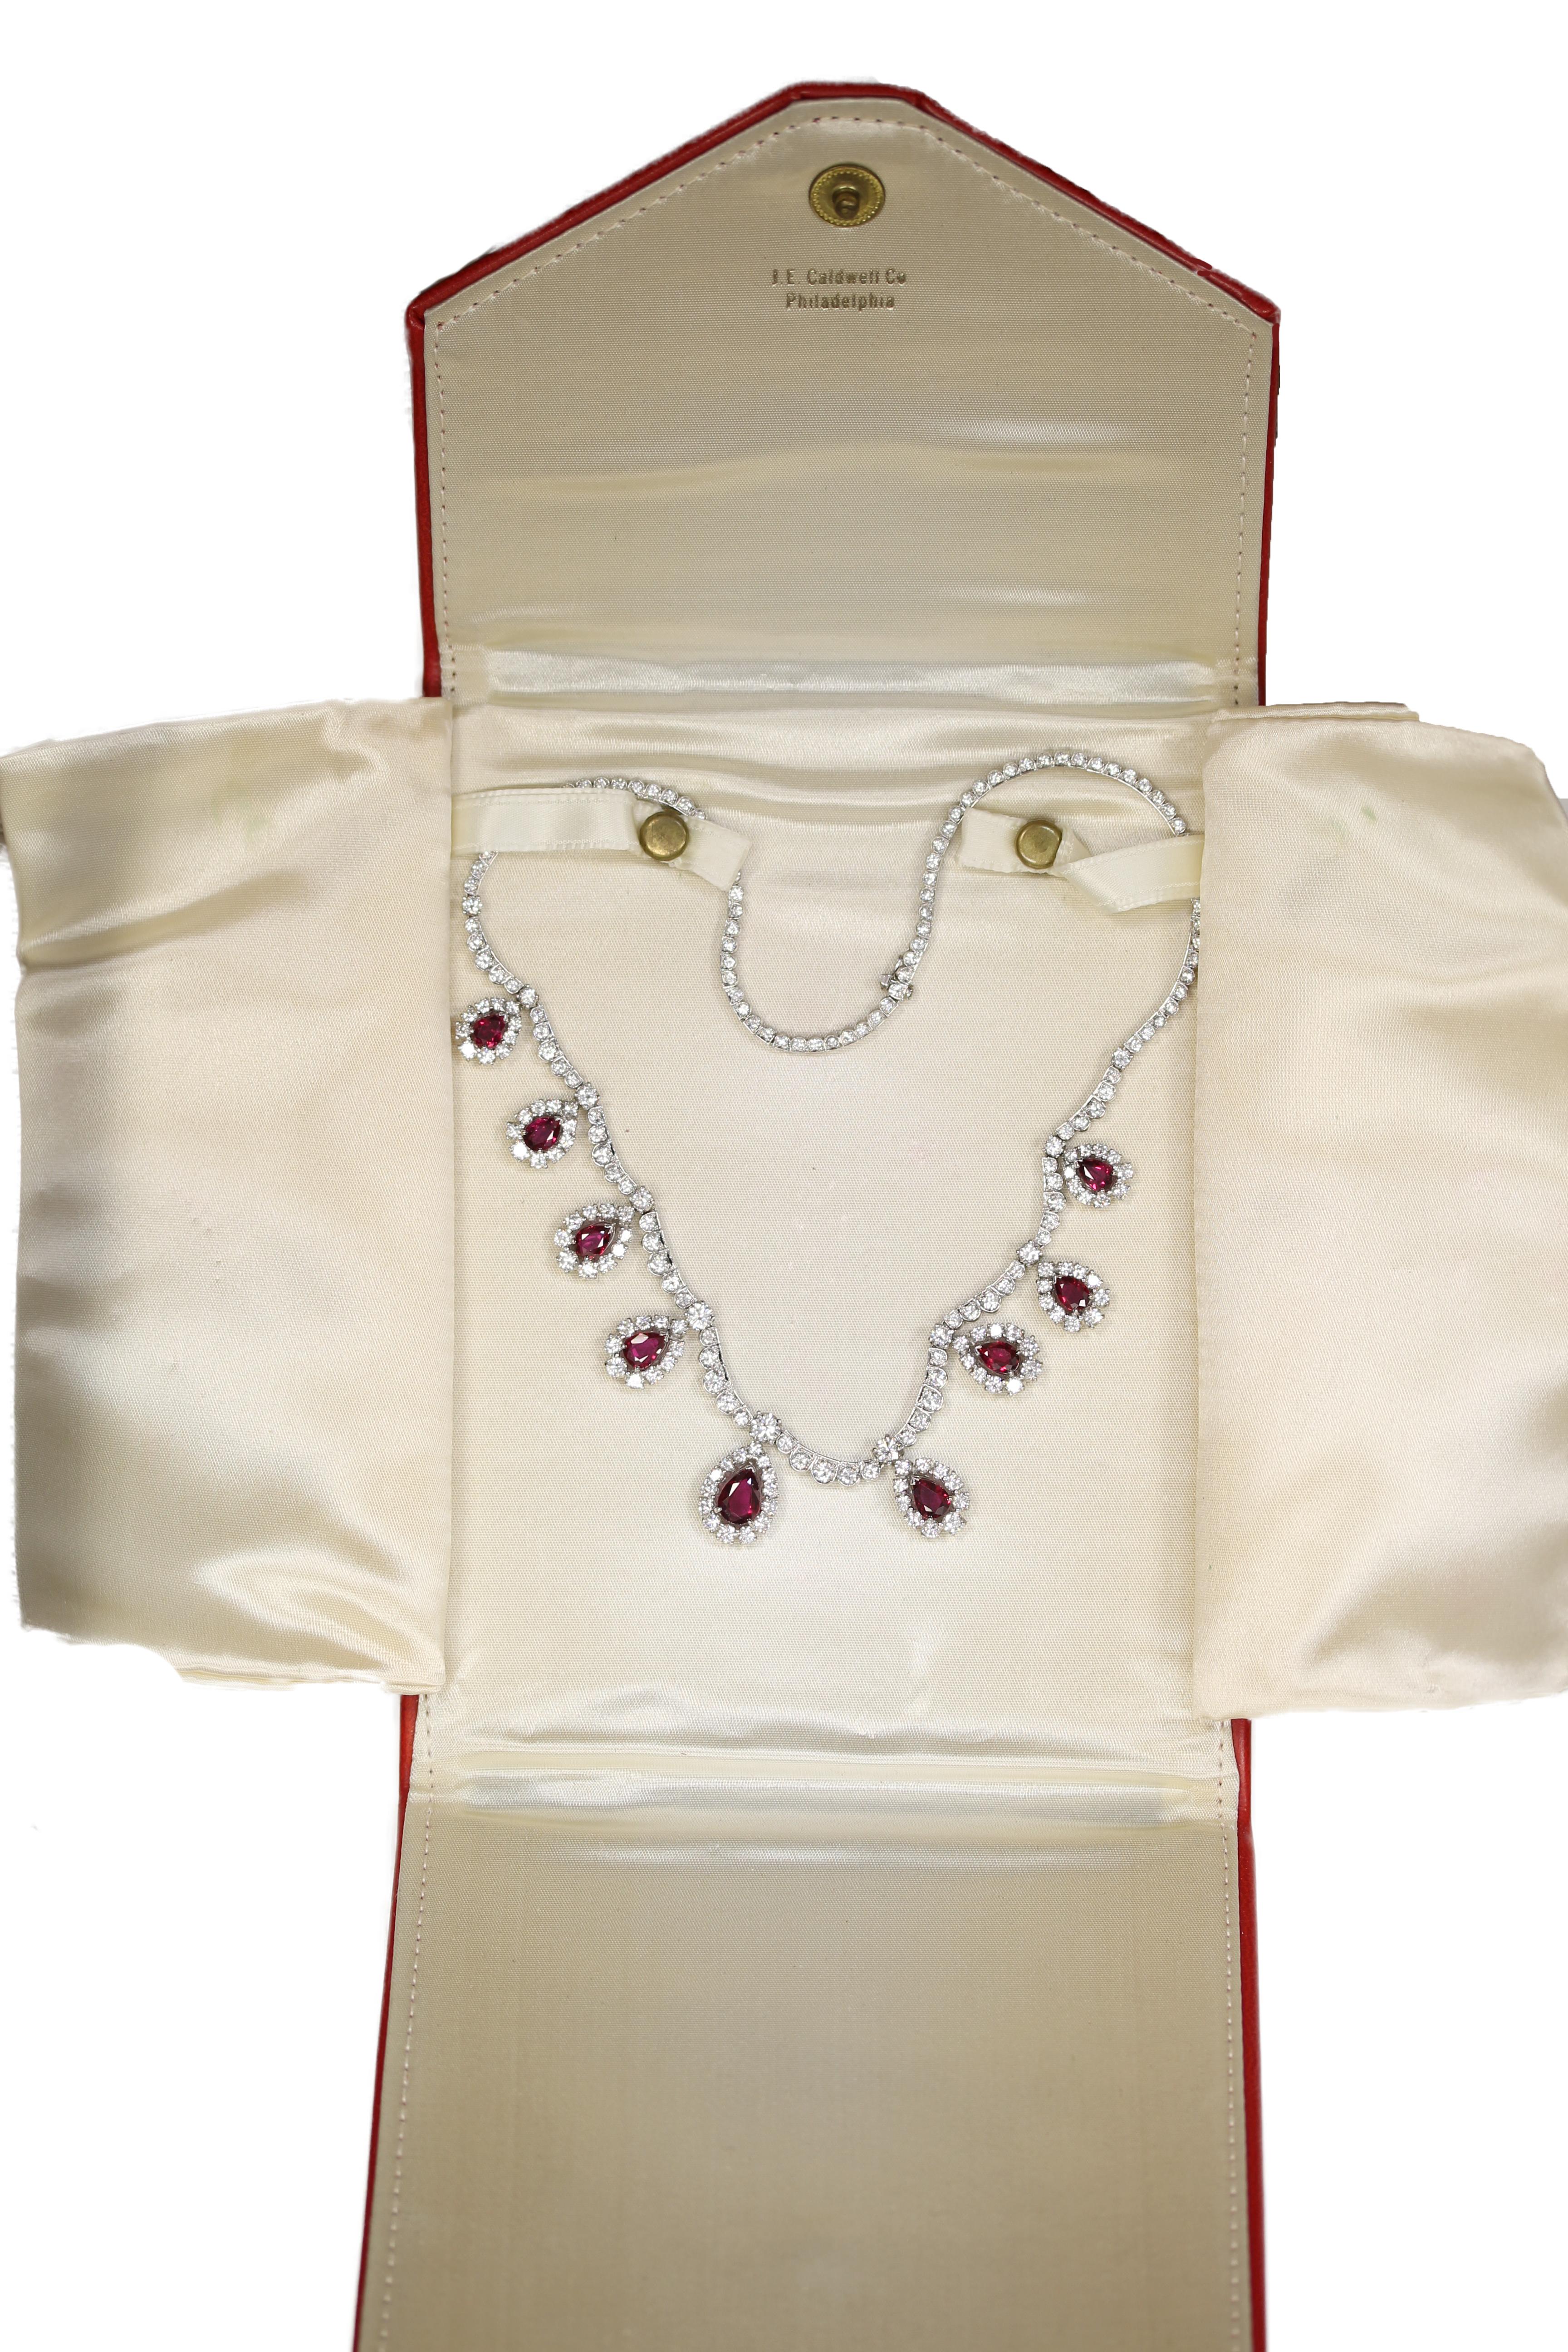 Women's Oscar Heyman for J. E. Caldwell Ruby and Diamond Necklace   For Sale